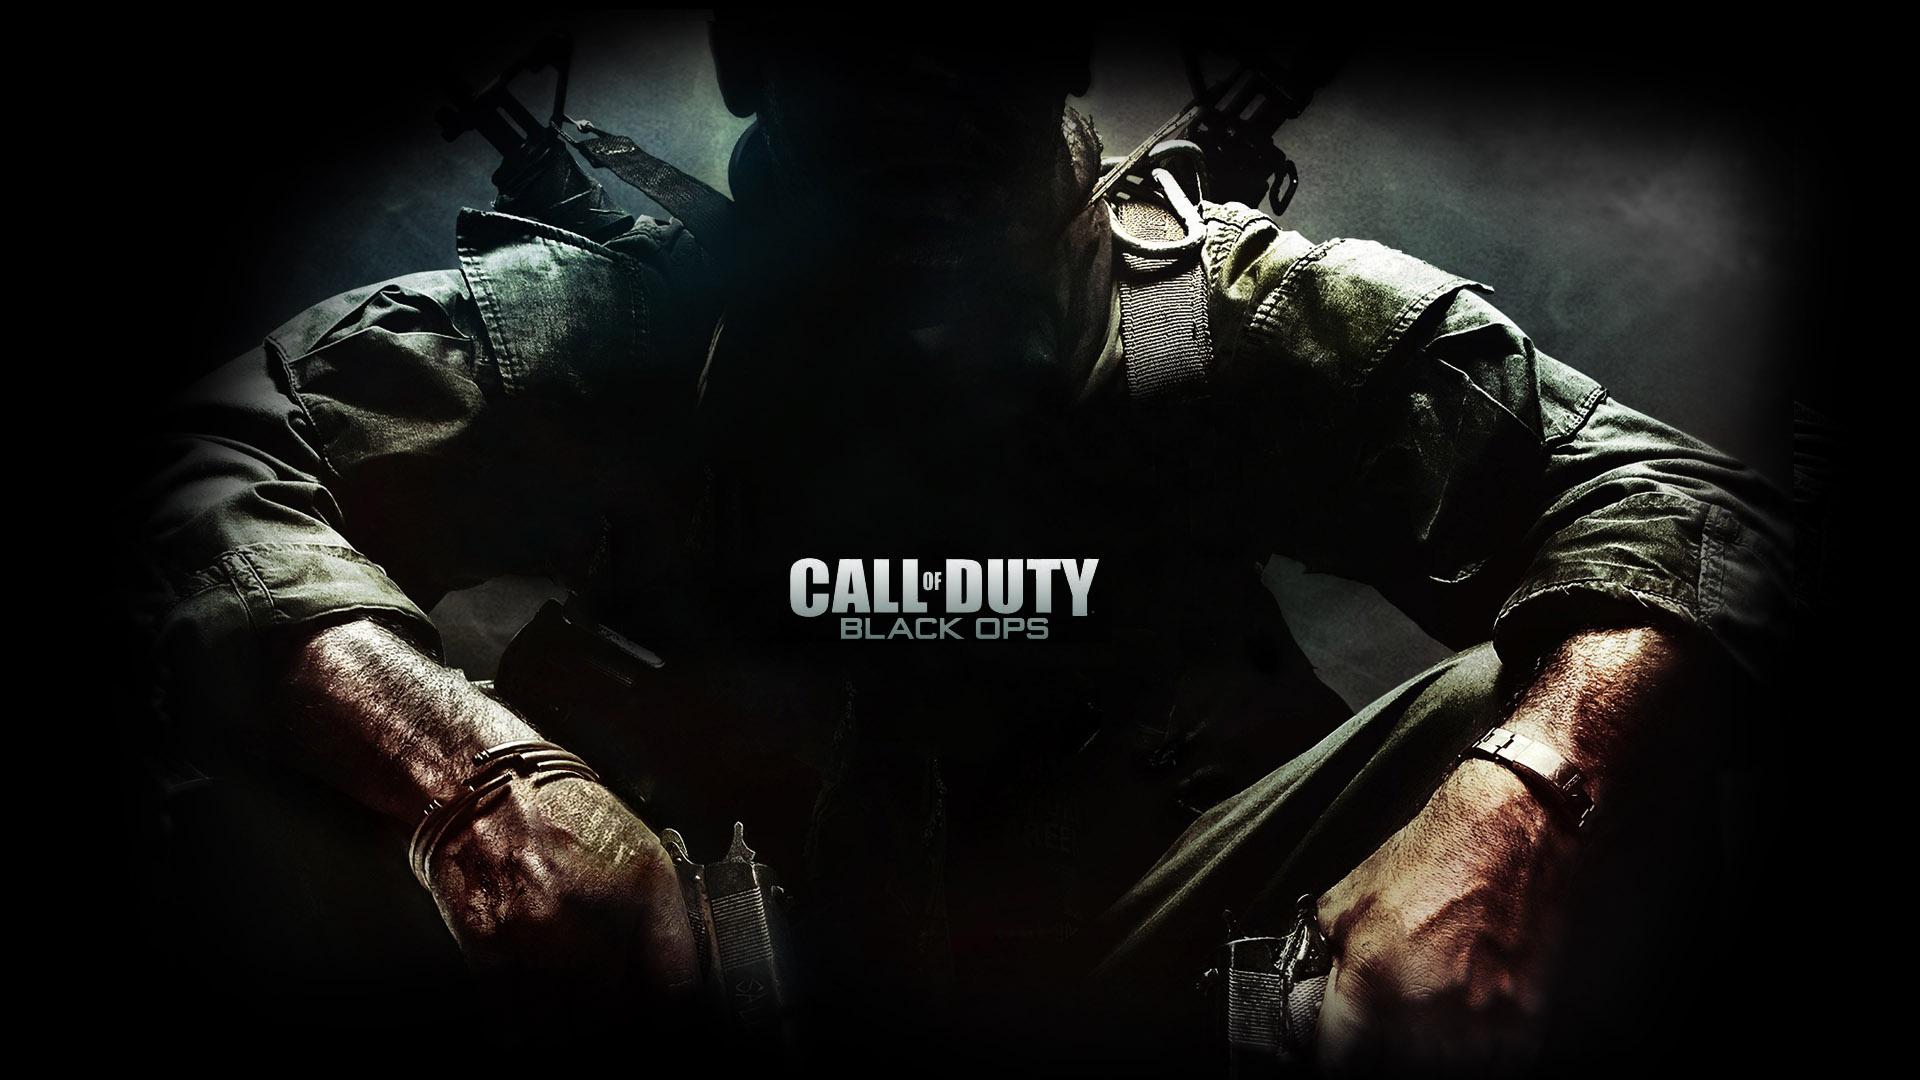 Hd Wallpaper Call Of Duty Black Ops | HD Wallpapers Range